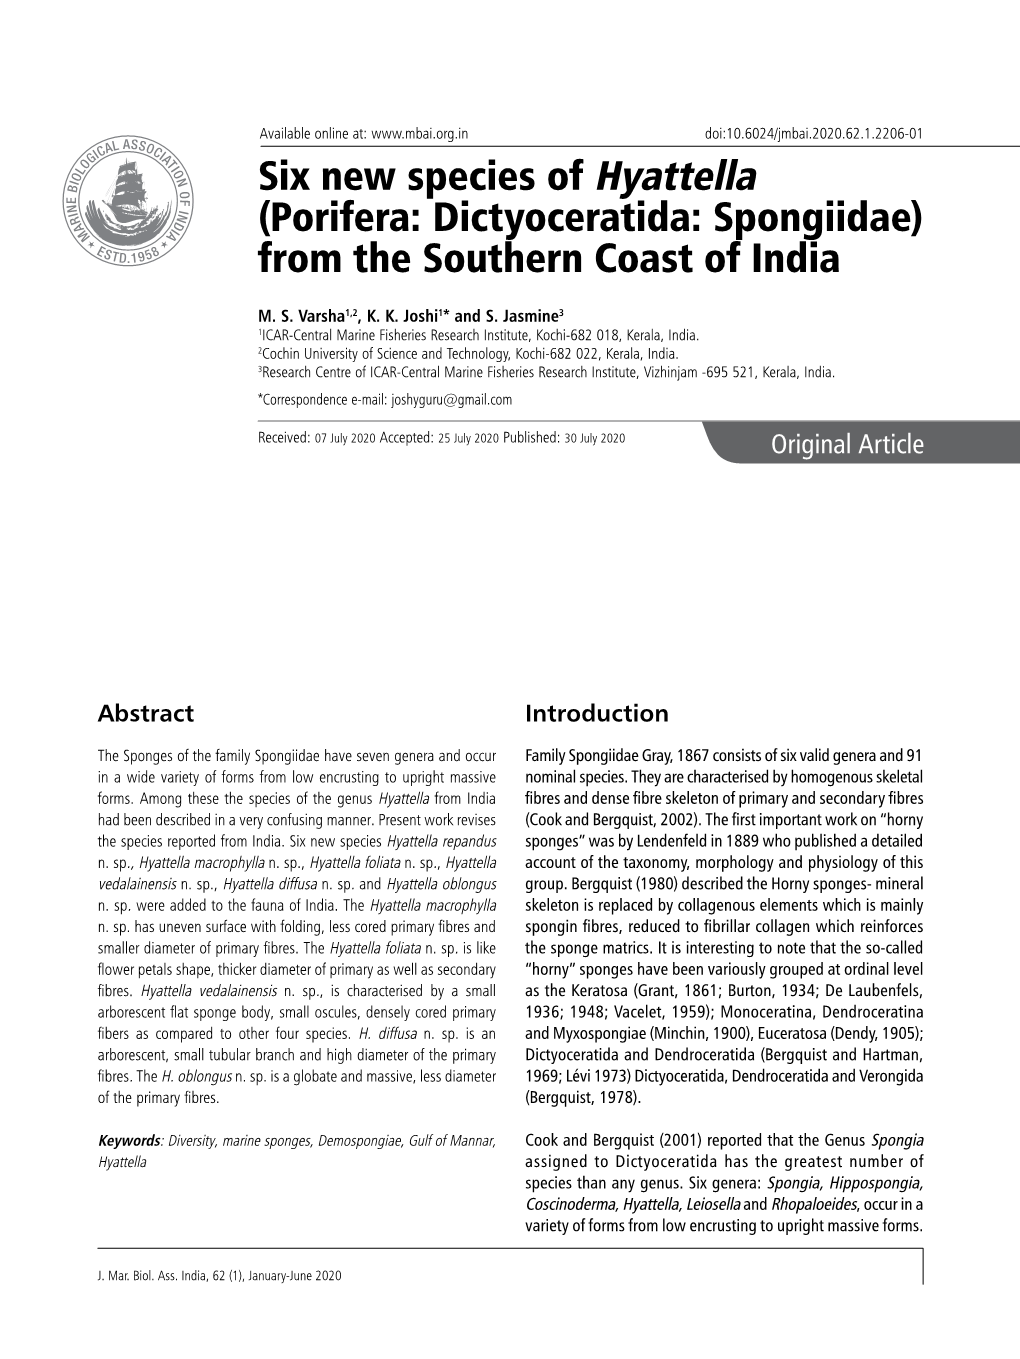 Porifera: Dictyoceratida: Spongiidae) from the Southern Coast of India